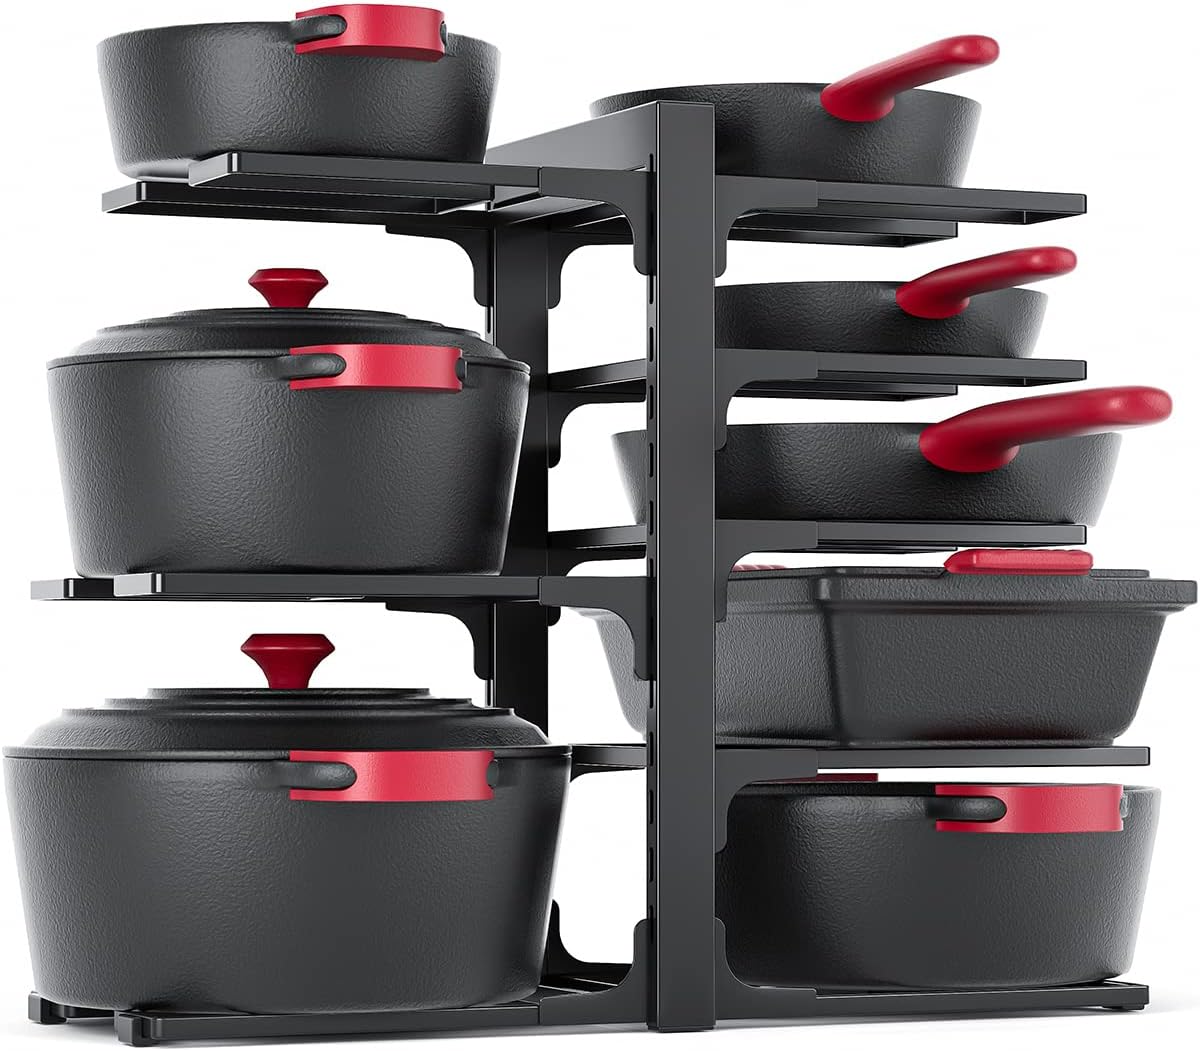 MUDEELA 8-Tier Heavy Duty Adjustable Pan Organizer Rack for Kitchen Cabinet Storage and Organization